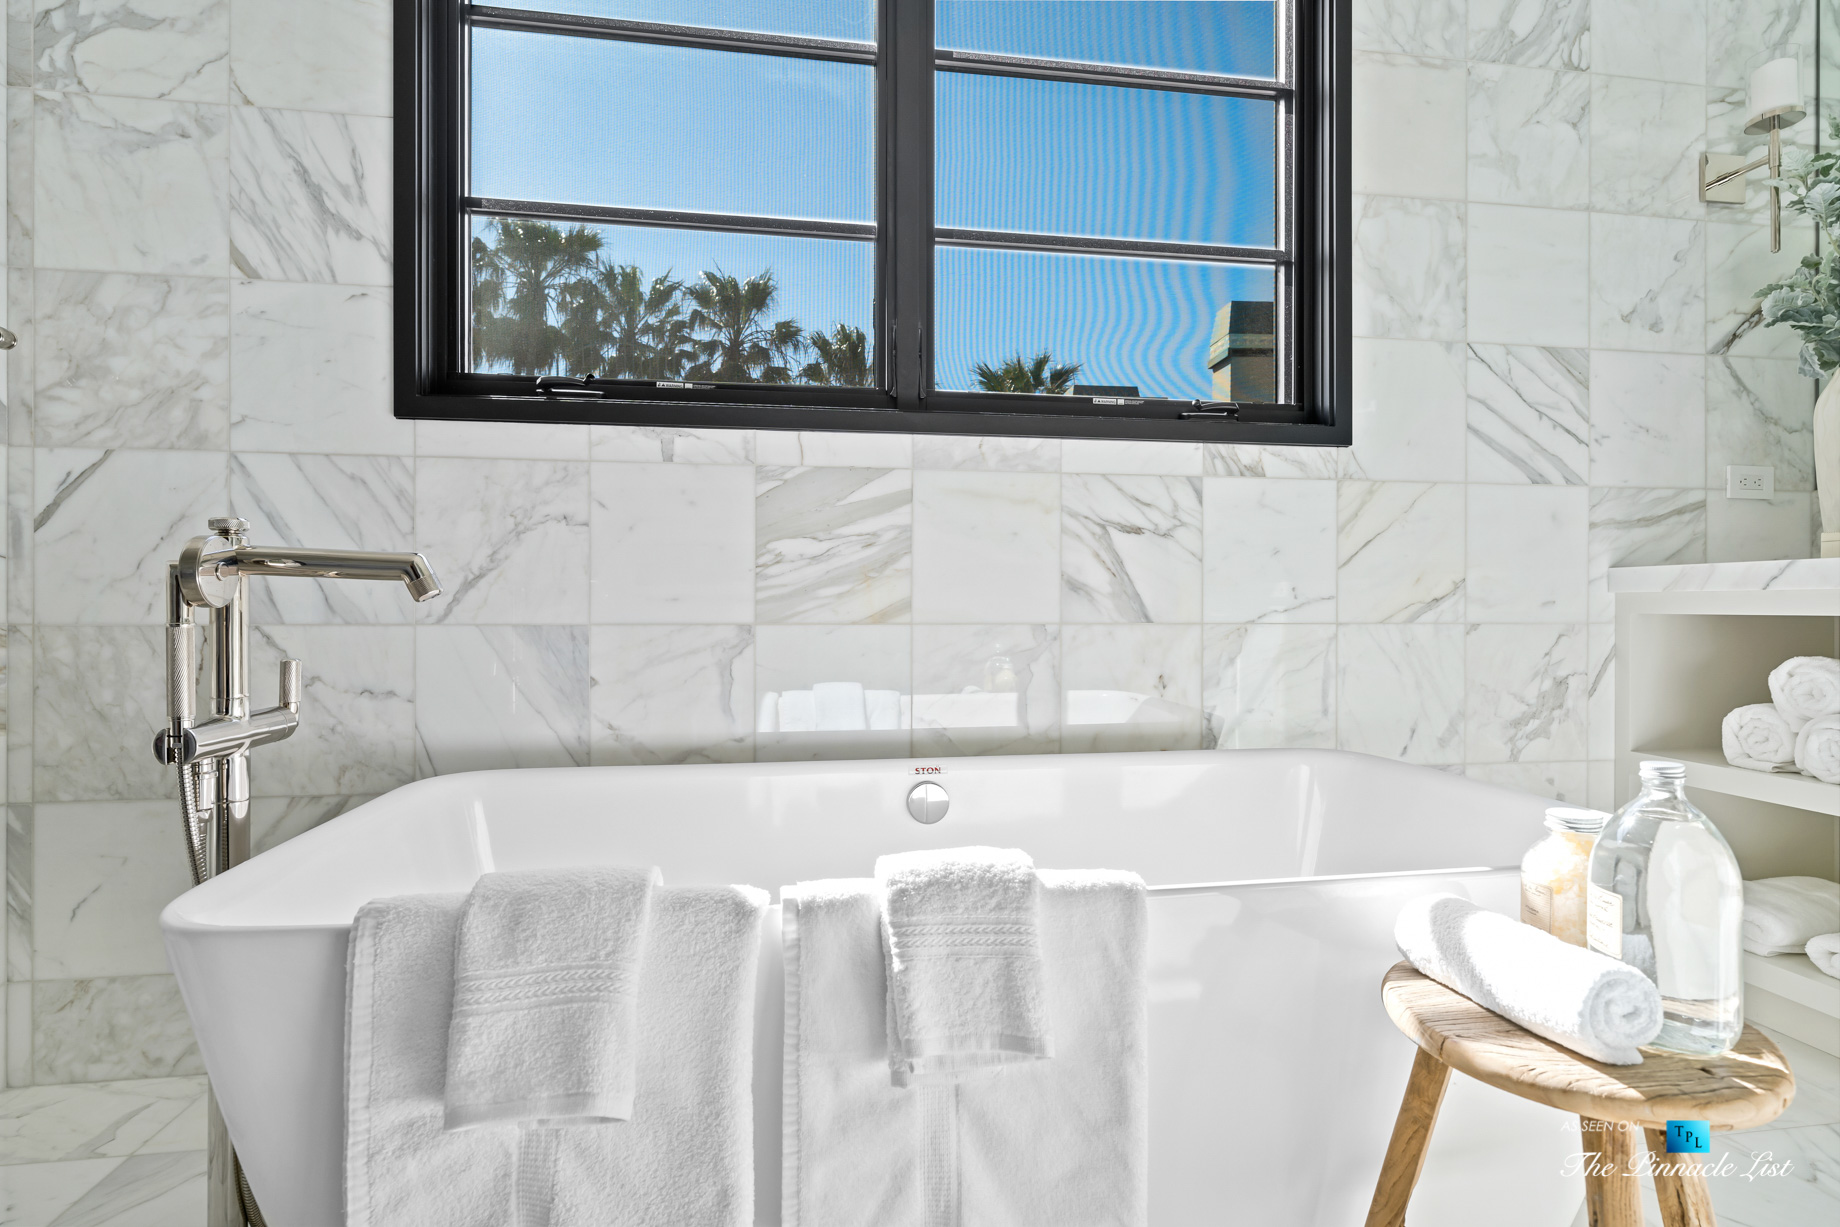 508 The Strand, Manhattan Beach, CA, USA - Master Bathroom Freestanding Tub - Luxury Real Estate - Oceanfront Home